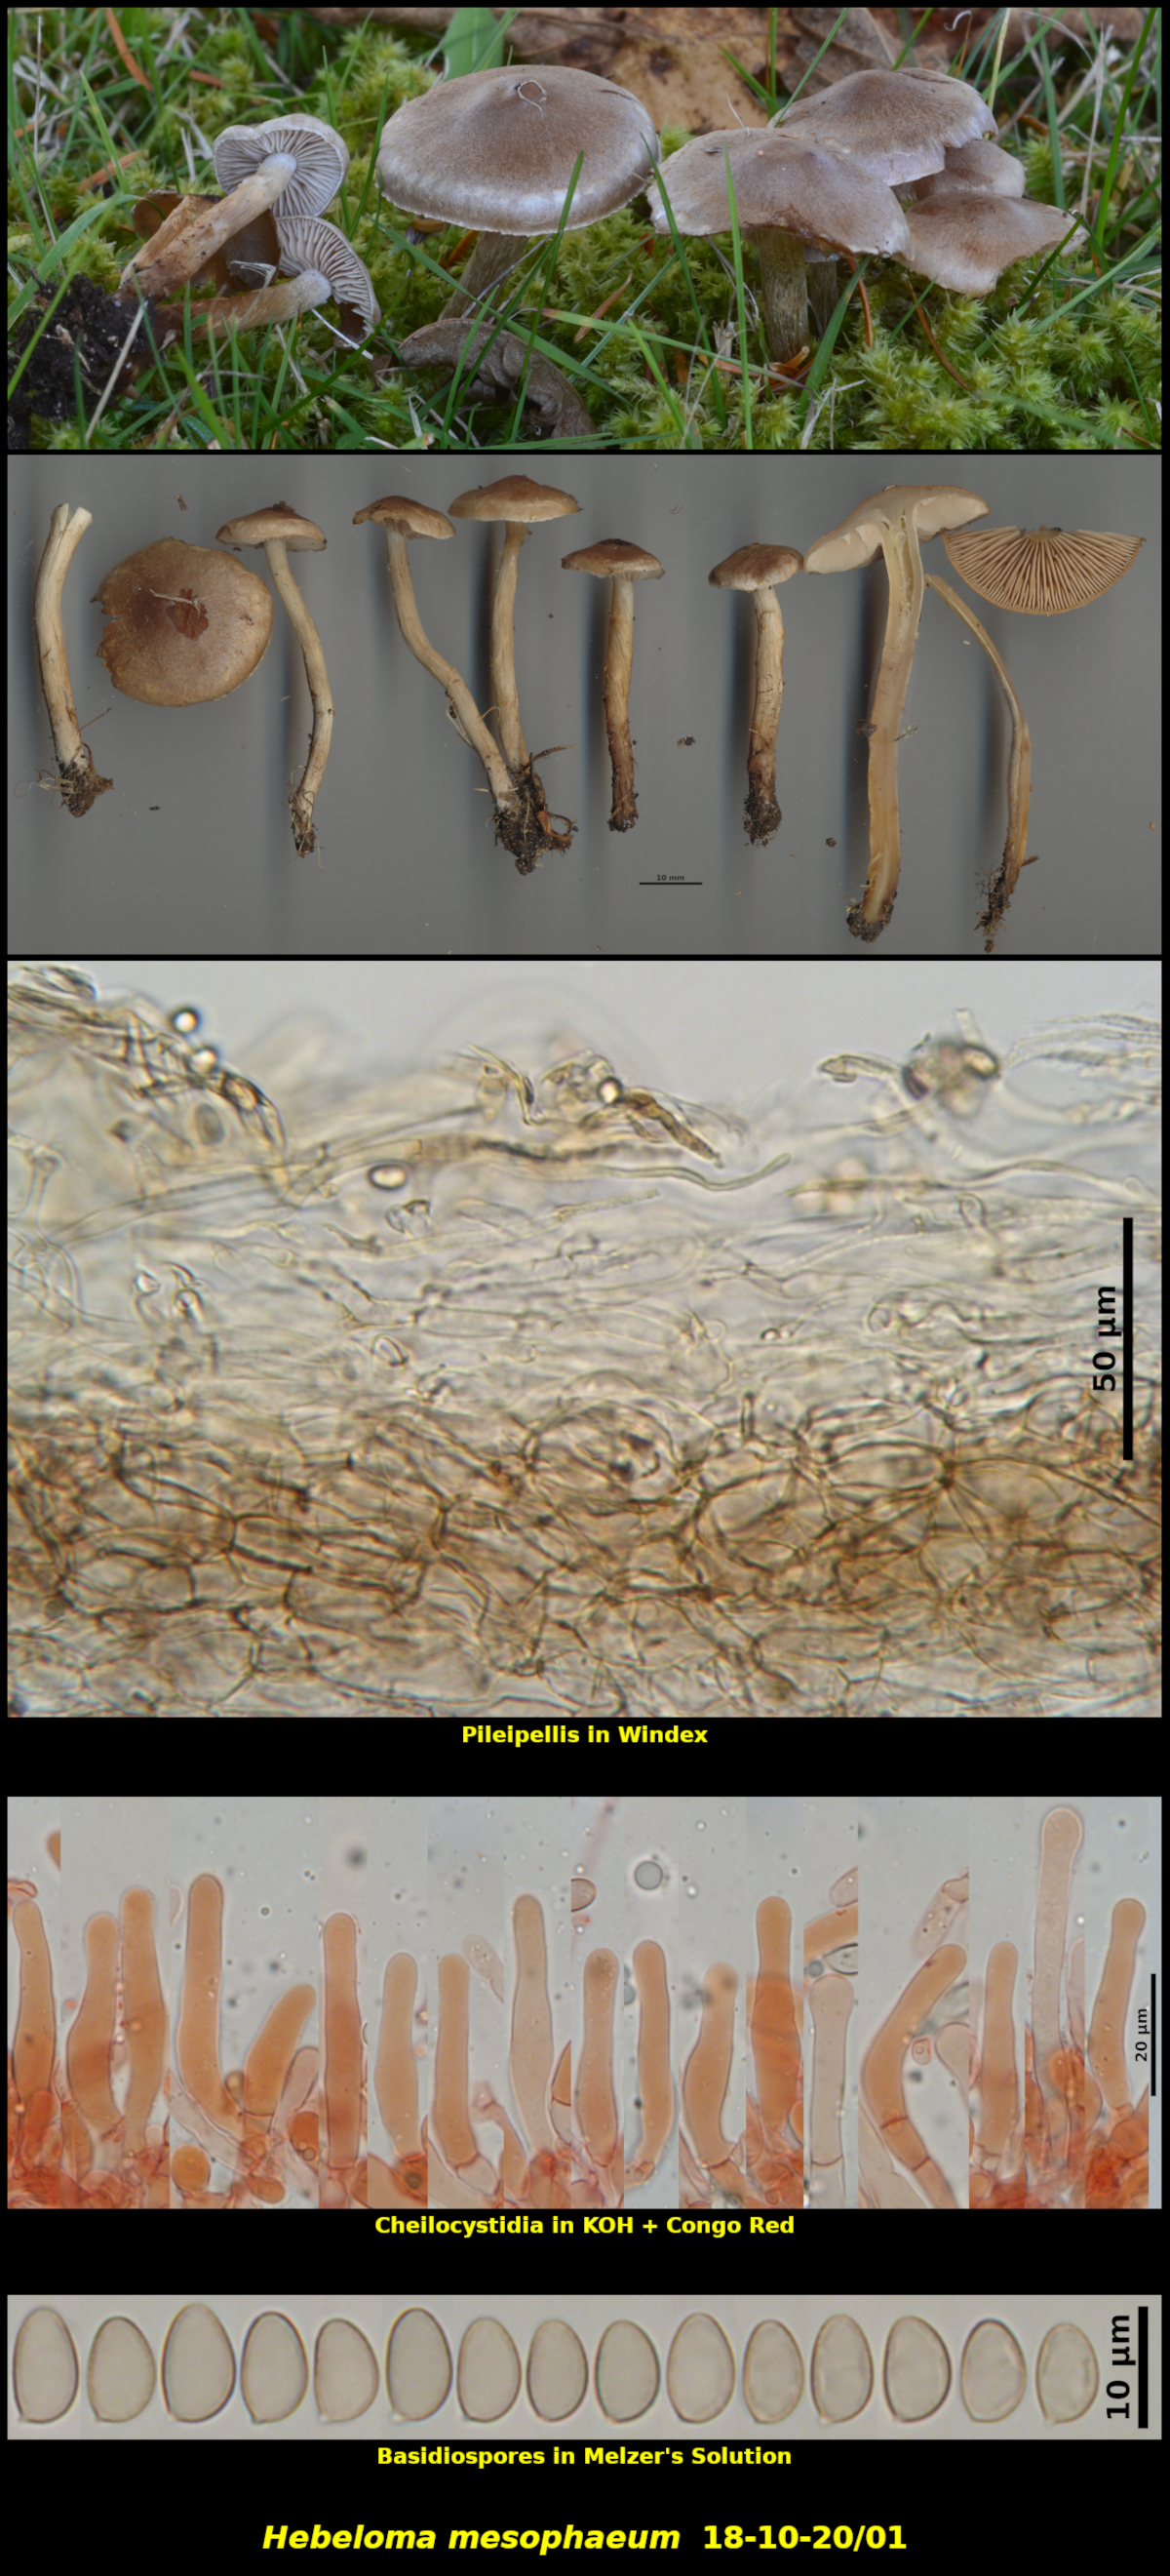 Picture of Hebeloma mesophaeum 18-10-20/01